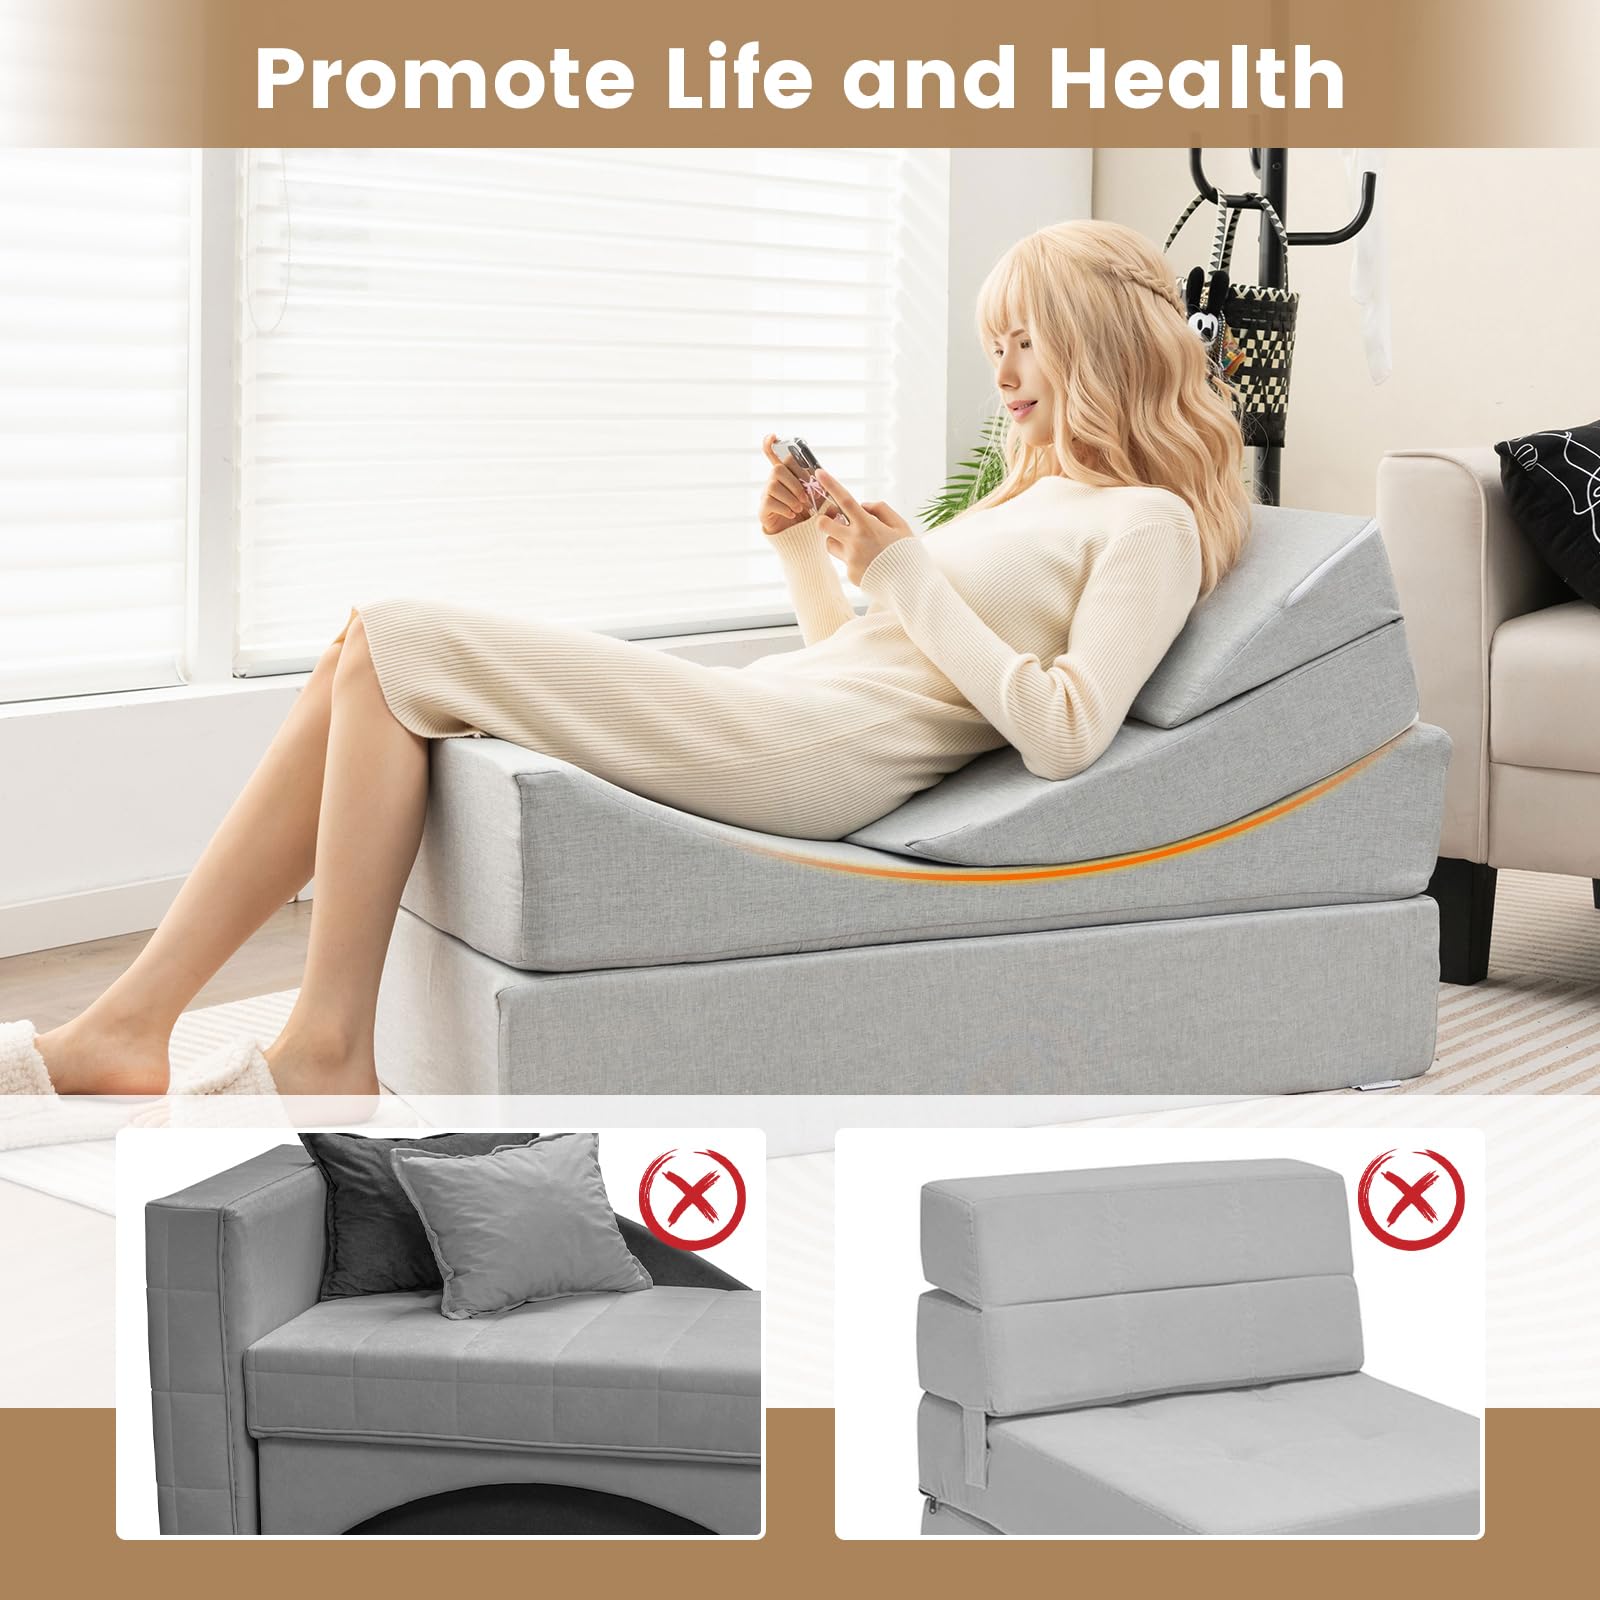 Giantex Convertible Folding Sofa Bed, 4-in-1 Floor Futon Sleeper Chair with High-Density Foam